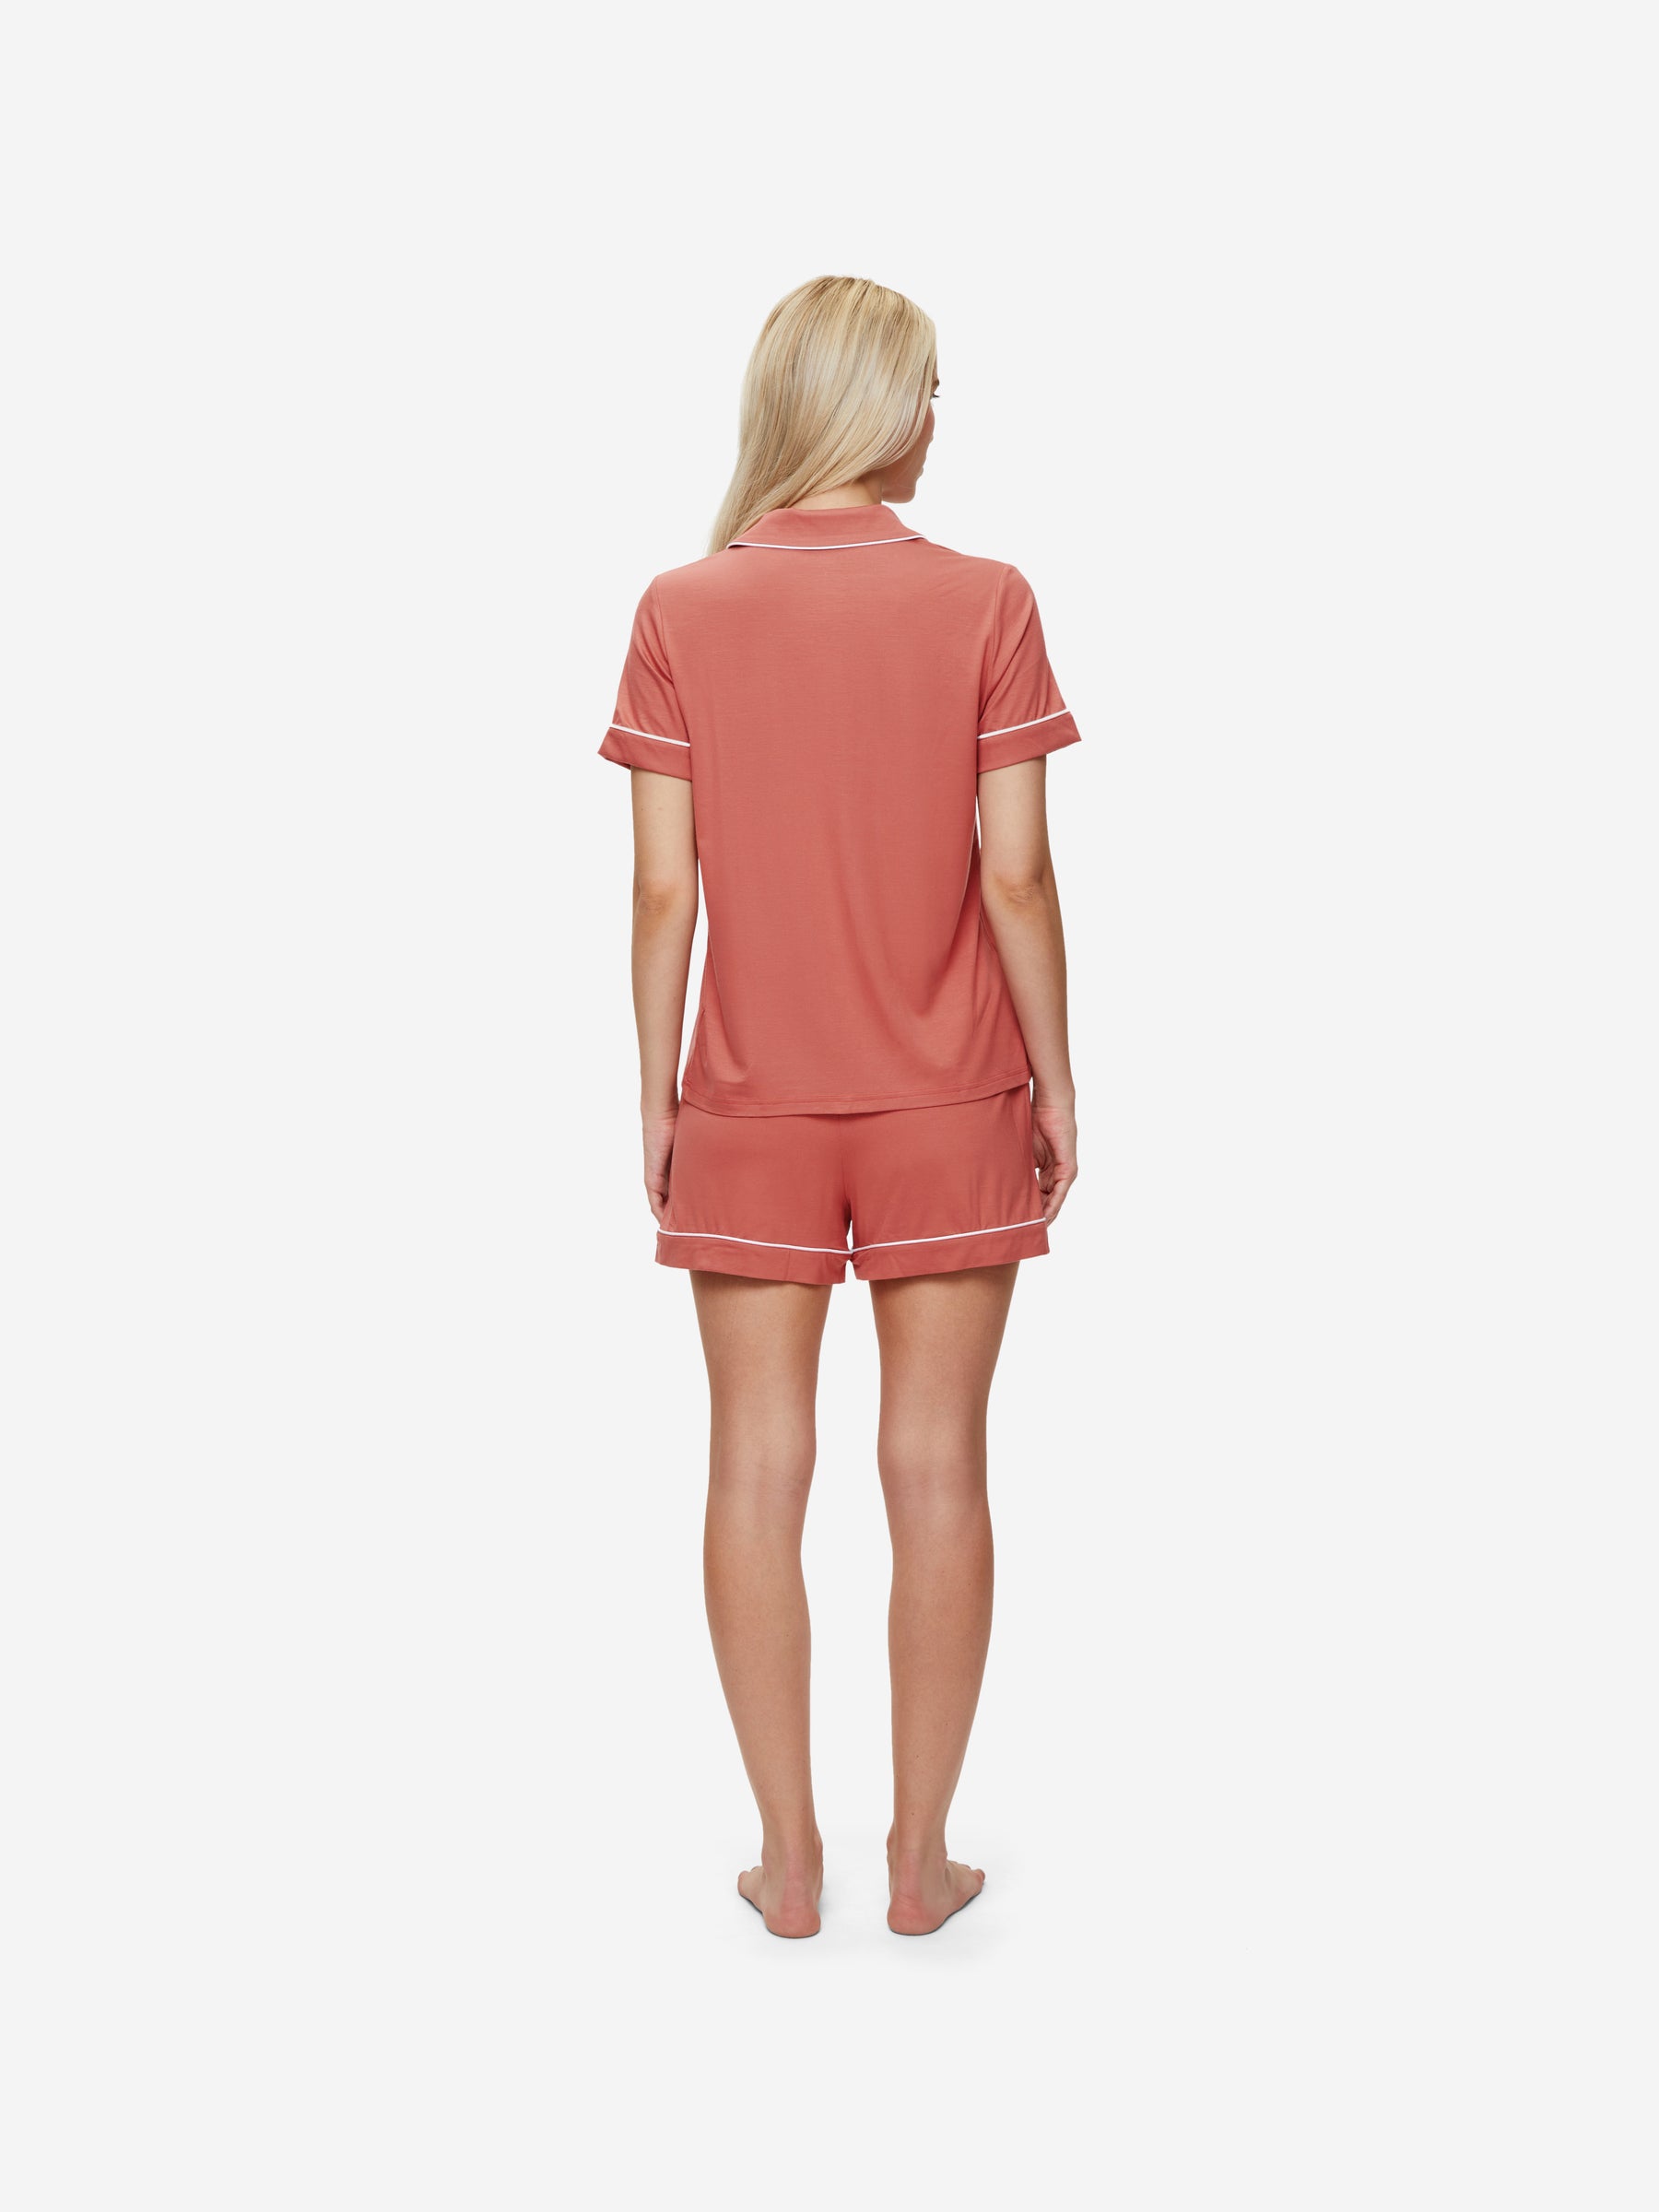 Women's Short Pyjamas Lara Micro Modal Stretch Soft Cedar